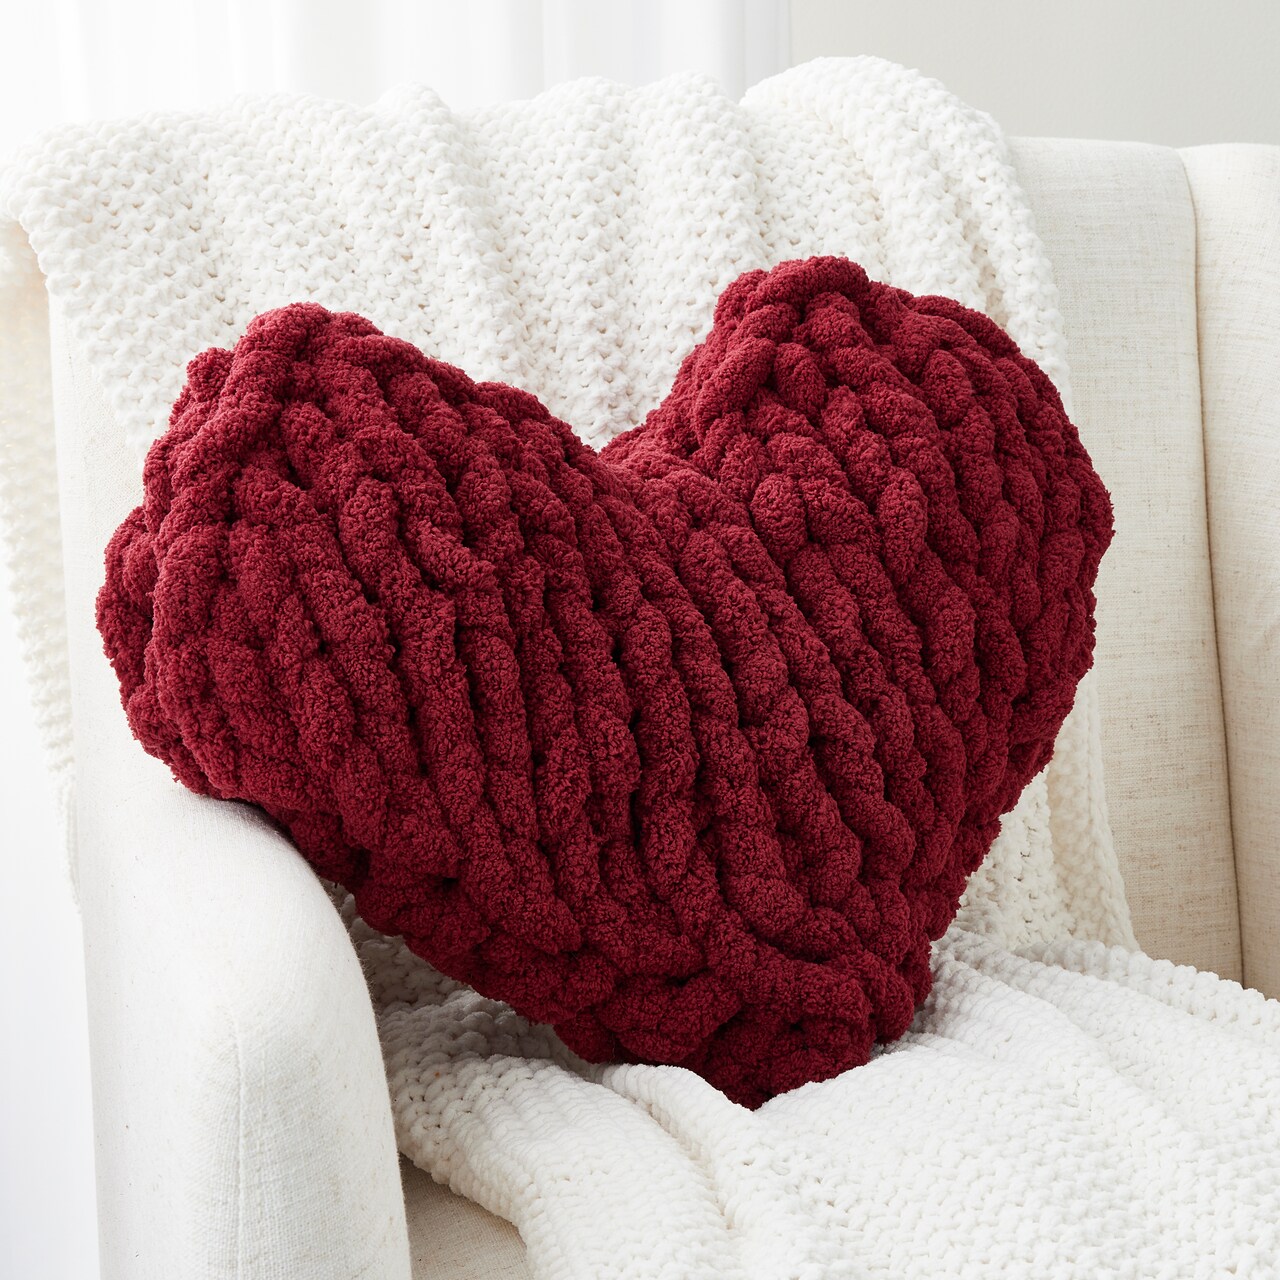 Hand-Knit Heart with Meghan Fahey